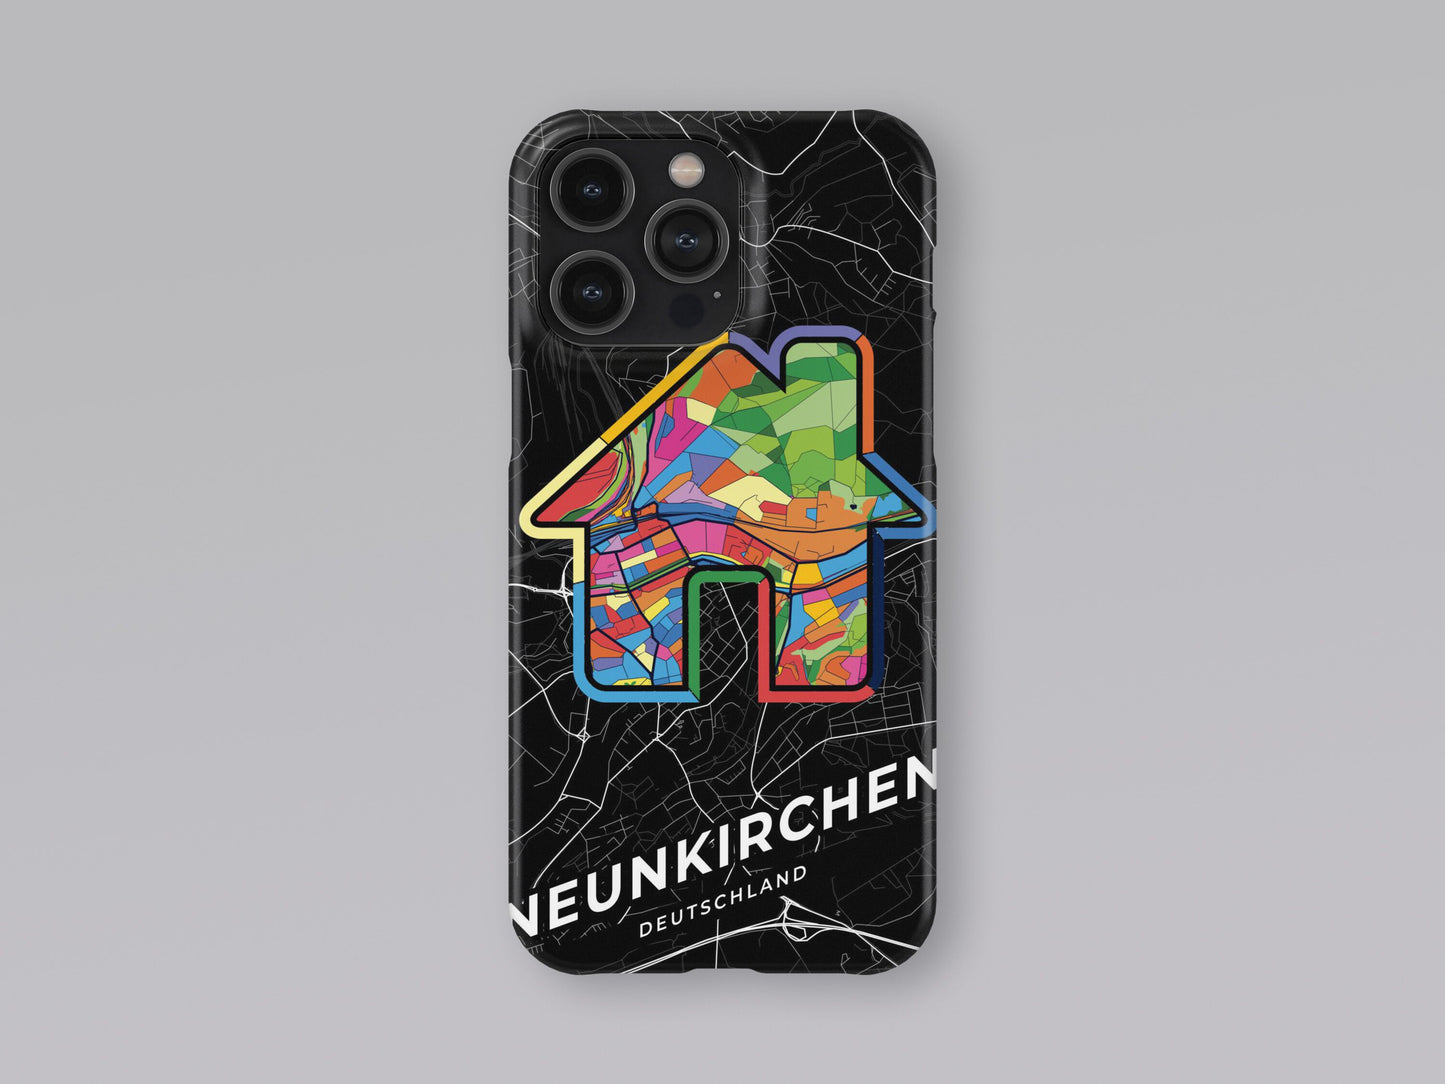 Neunkirchen Deutschland slim phone case with colorful icon. Birthday, wedding or housewarming gift. Couple match cases. 3